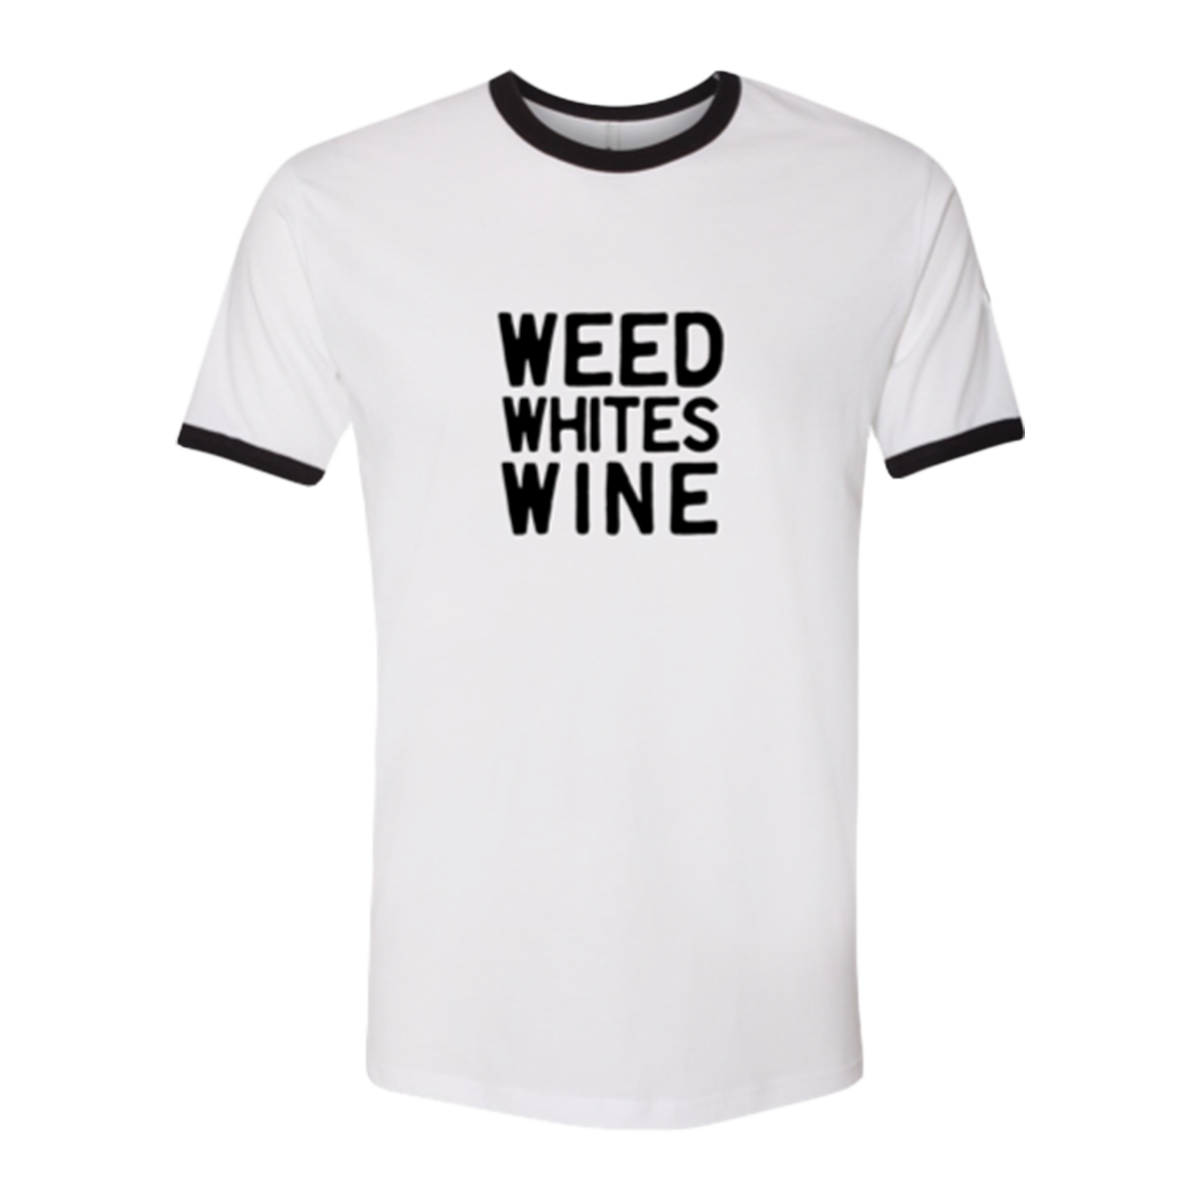 Weed Whites Wine Ringer Tee